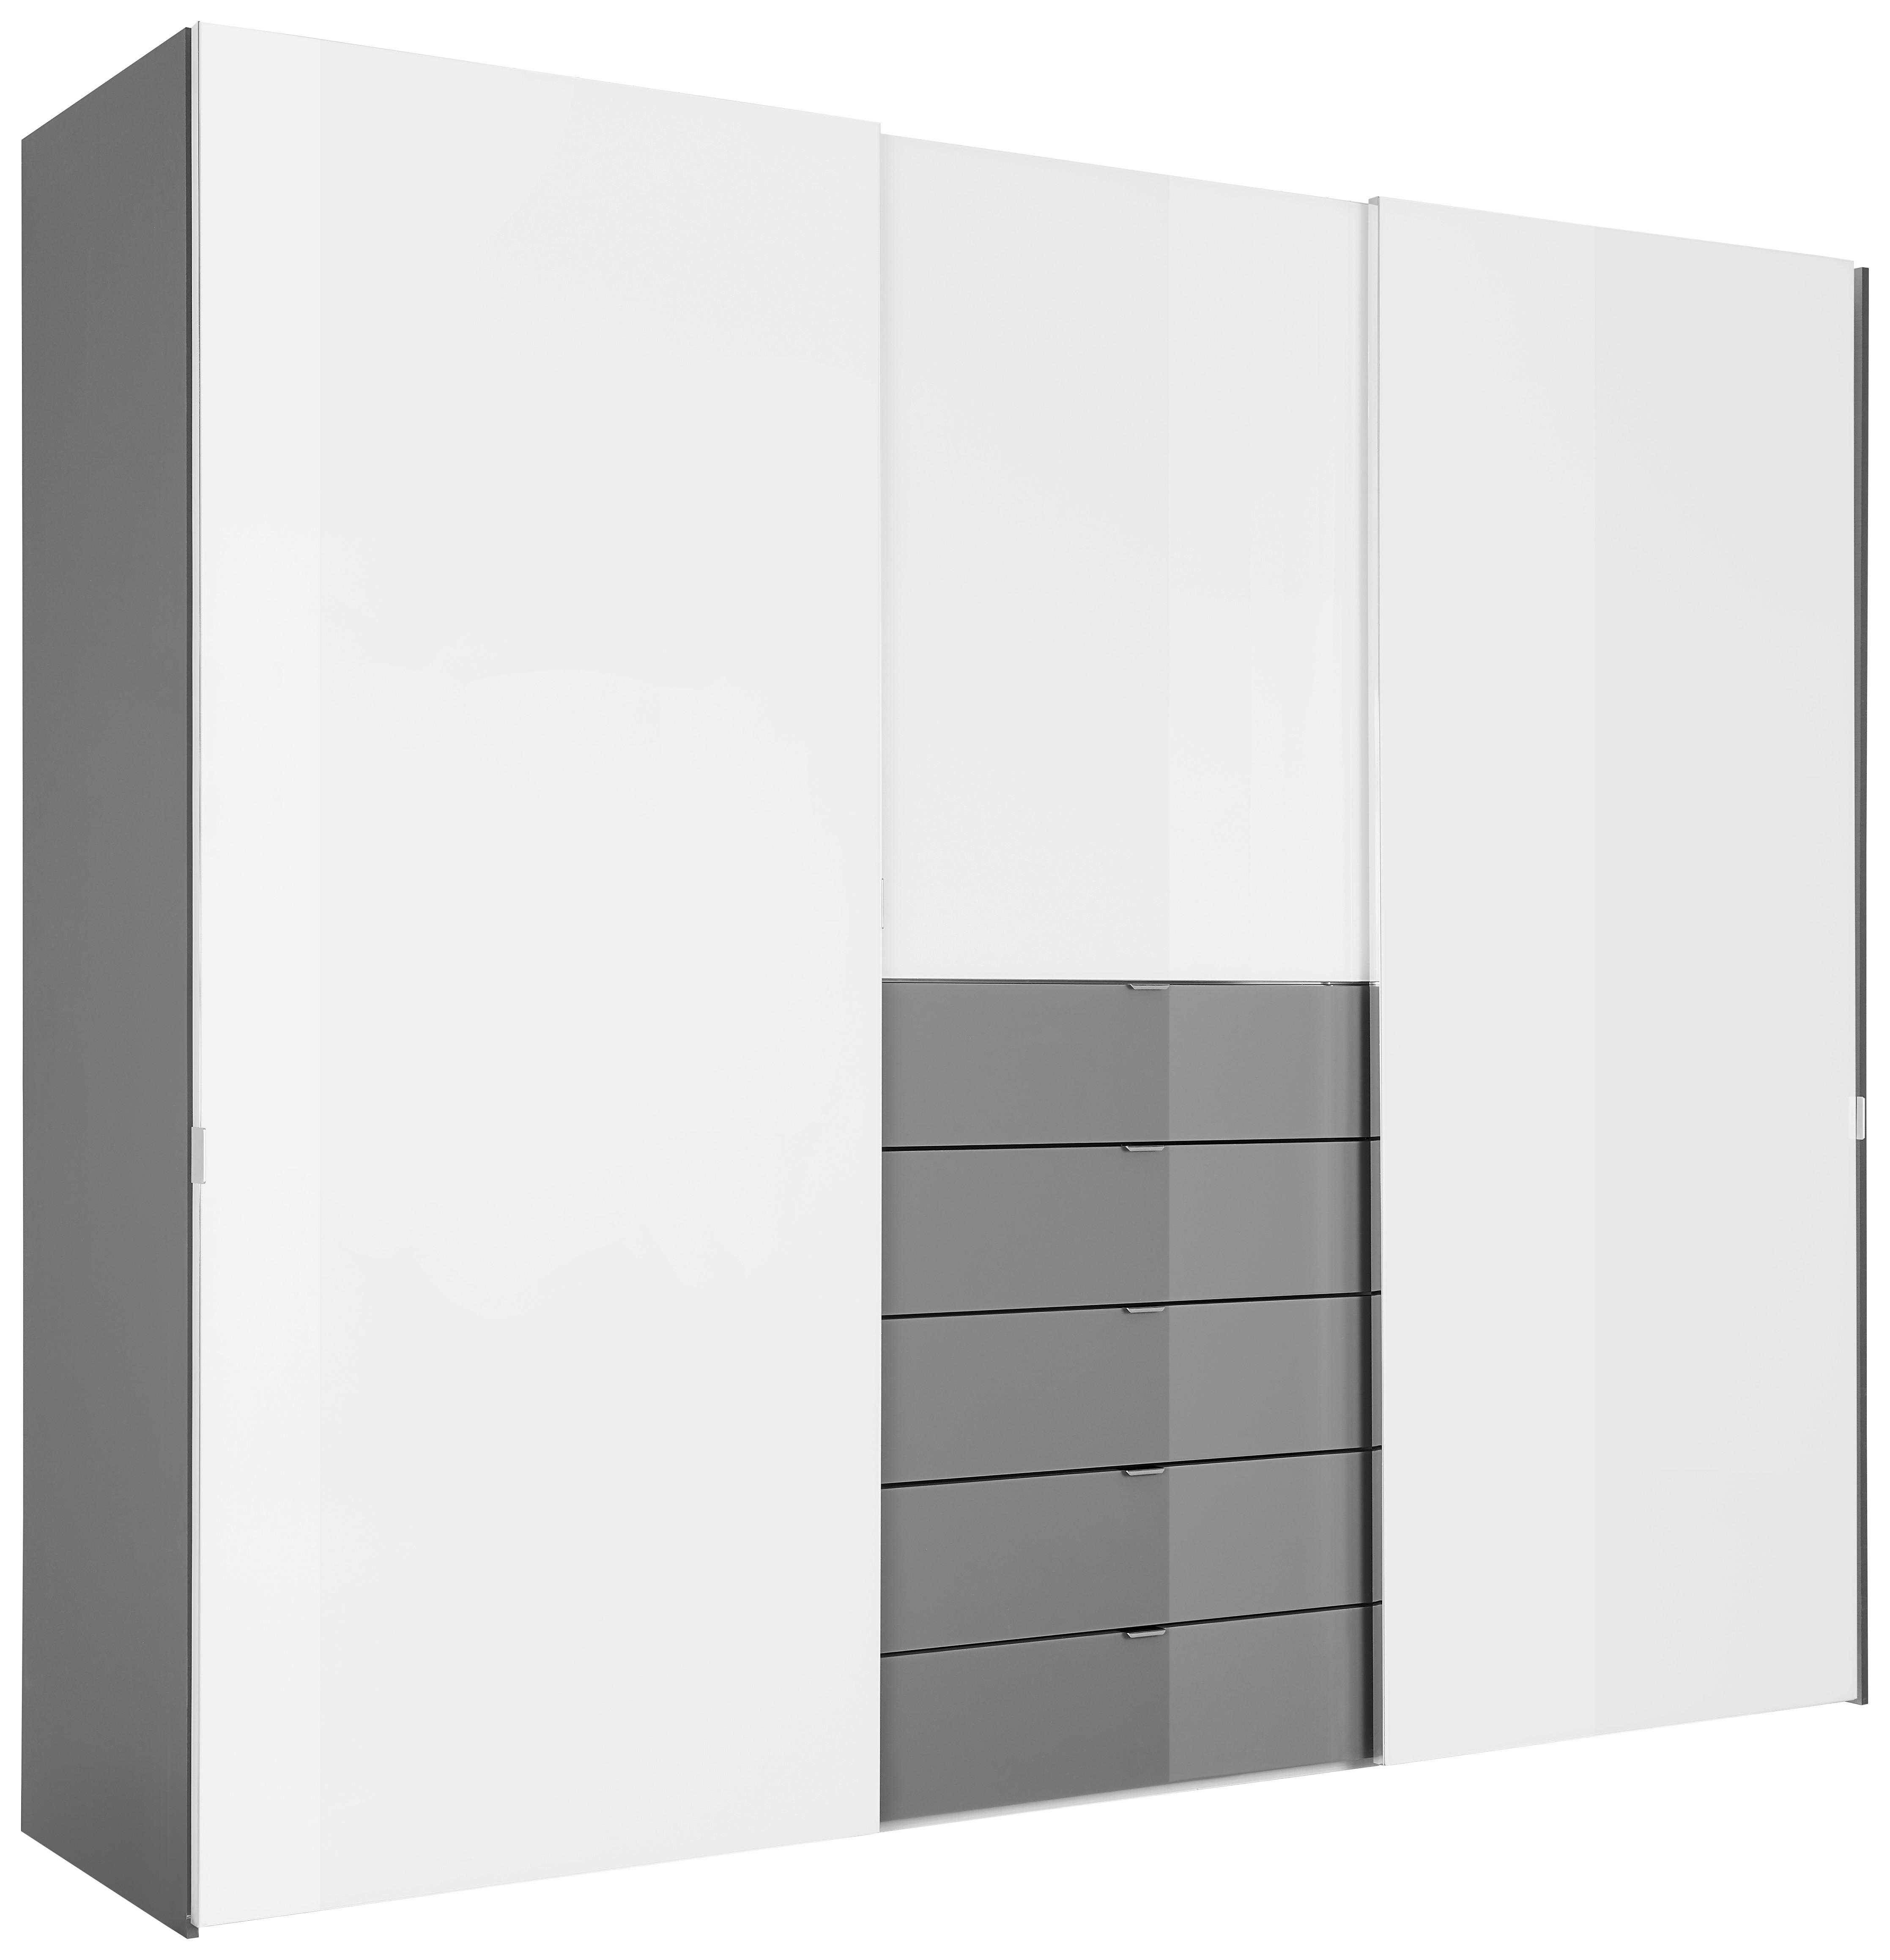 Moderano SKŘÍŇ S POSUVNÝMI DVEŘMI, šedá, bílá, 298/240/68 cm - šedá,bílá - kompozitní dřevo